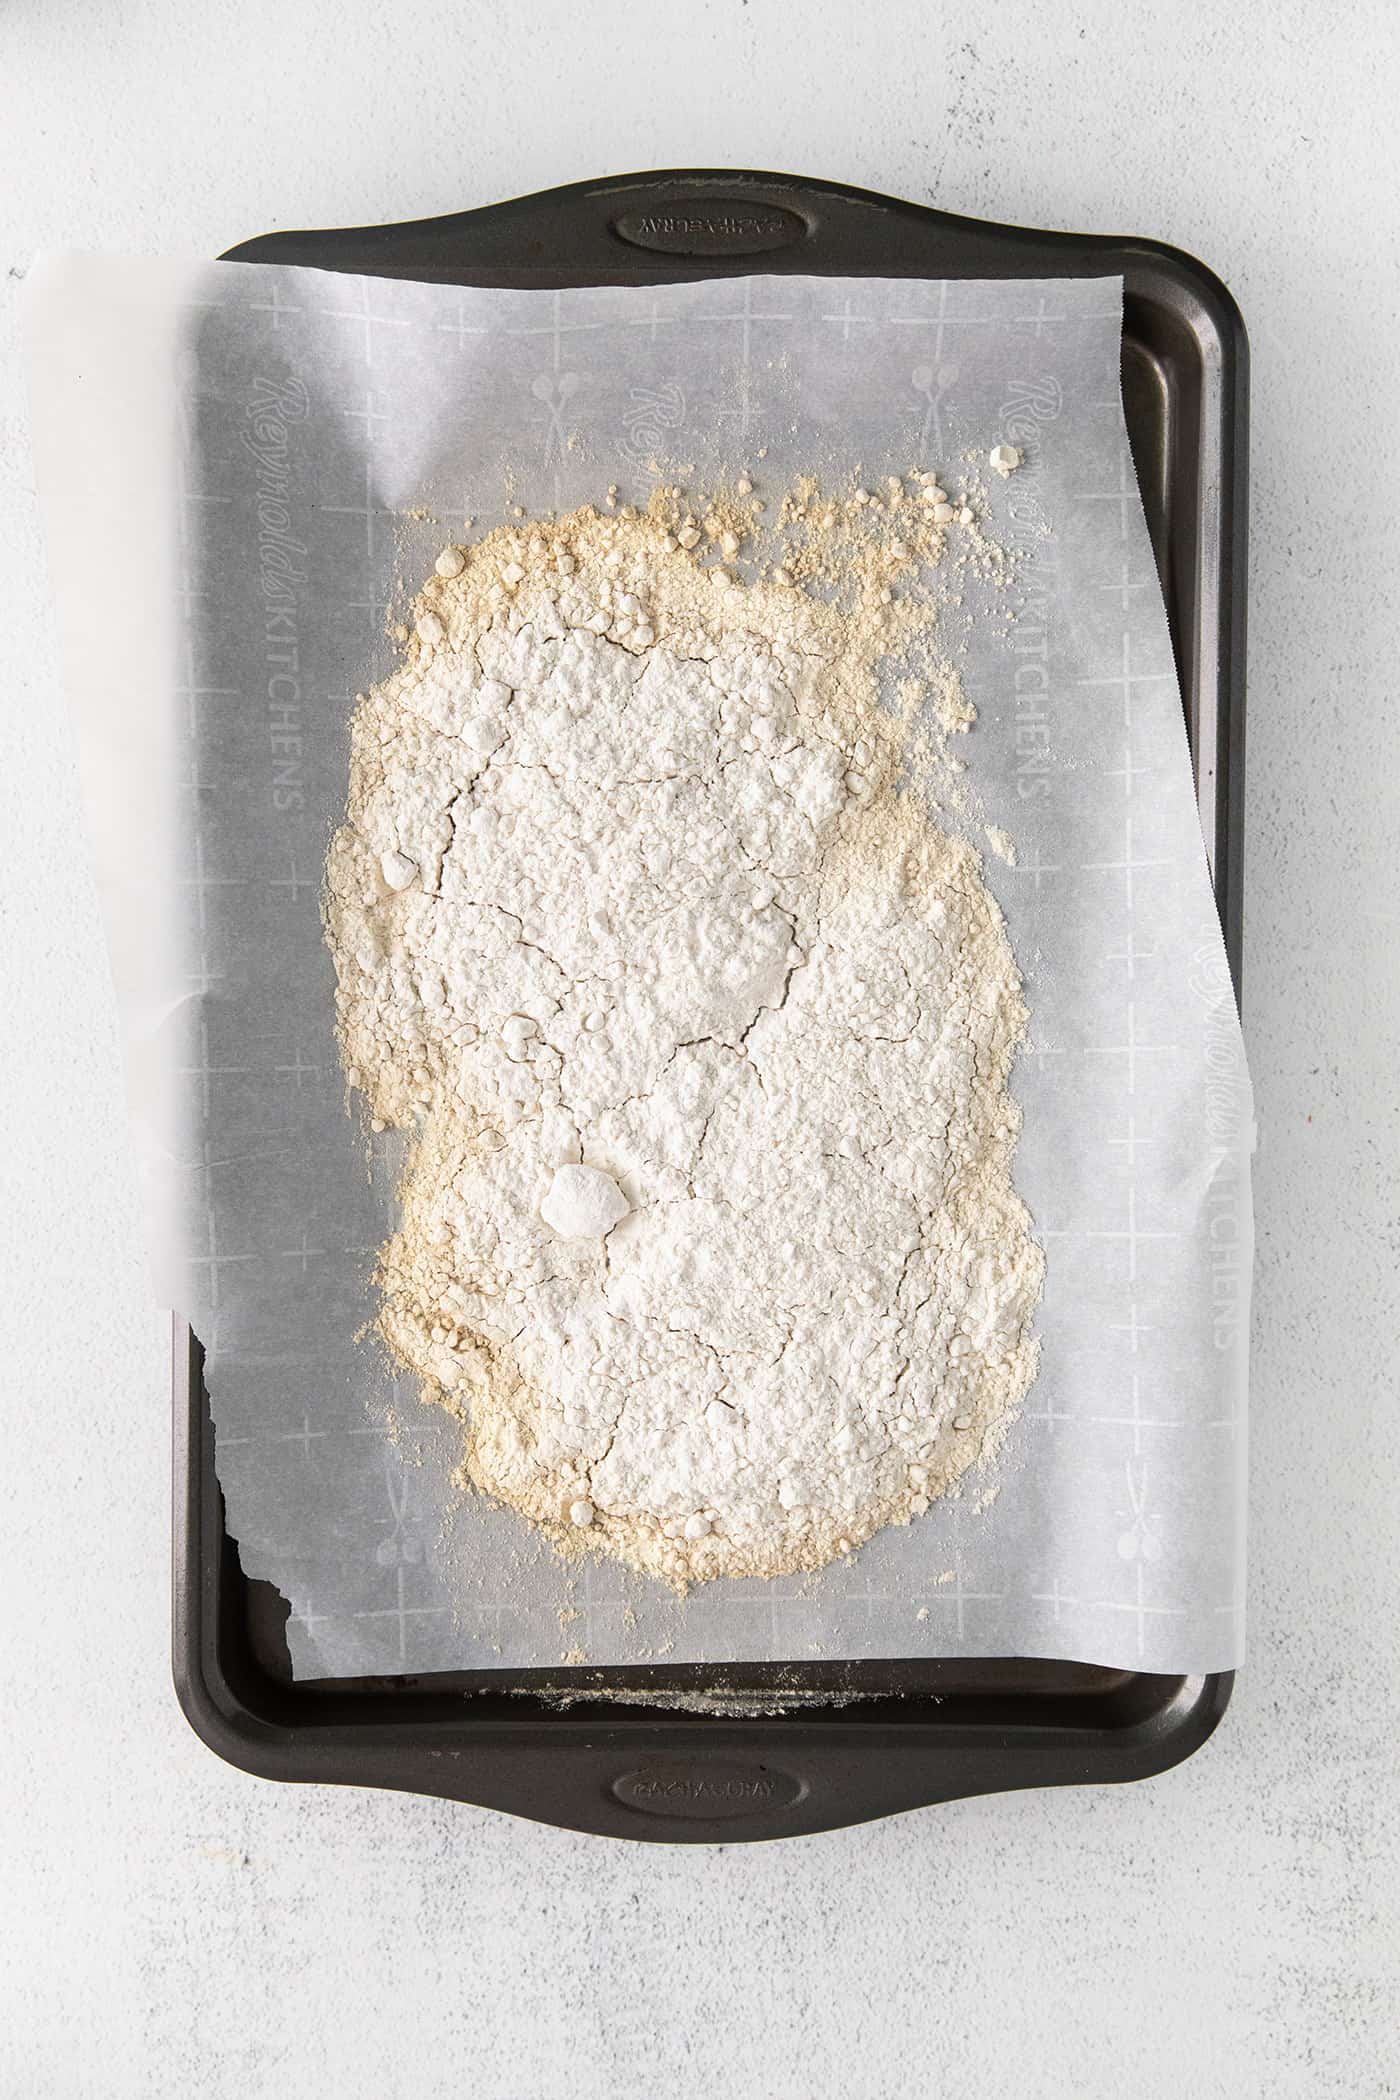 Heat treated flour on a baking sheet